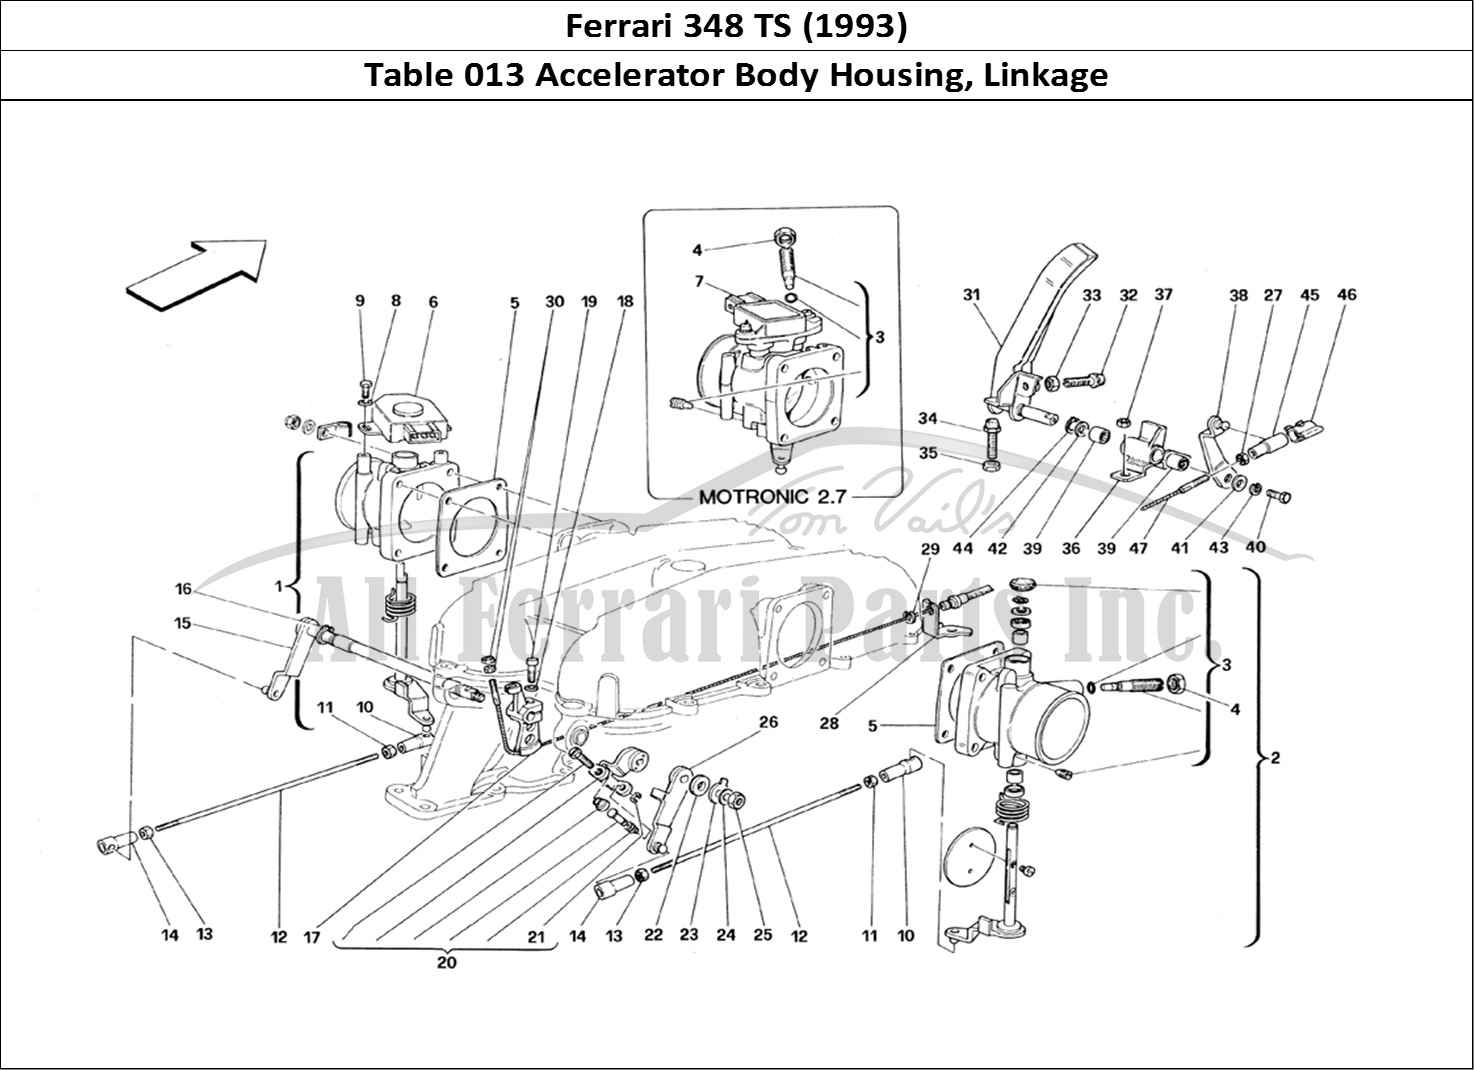 Ferrari Parts Ferrari 348 TB (1993) Page 013 Throttle Housing and Link